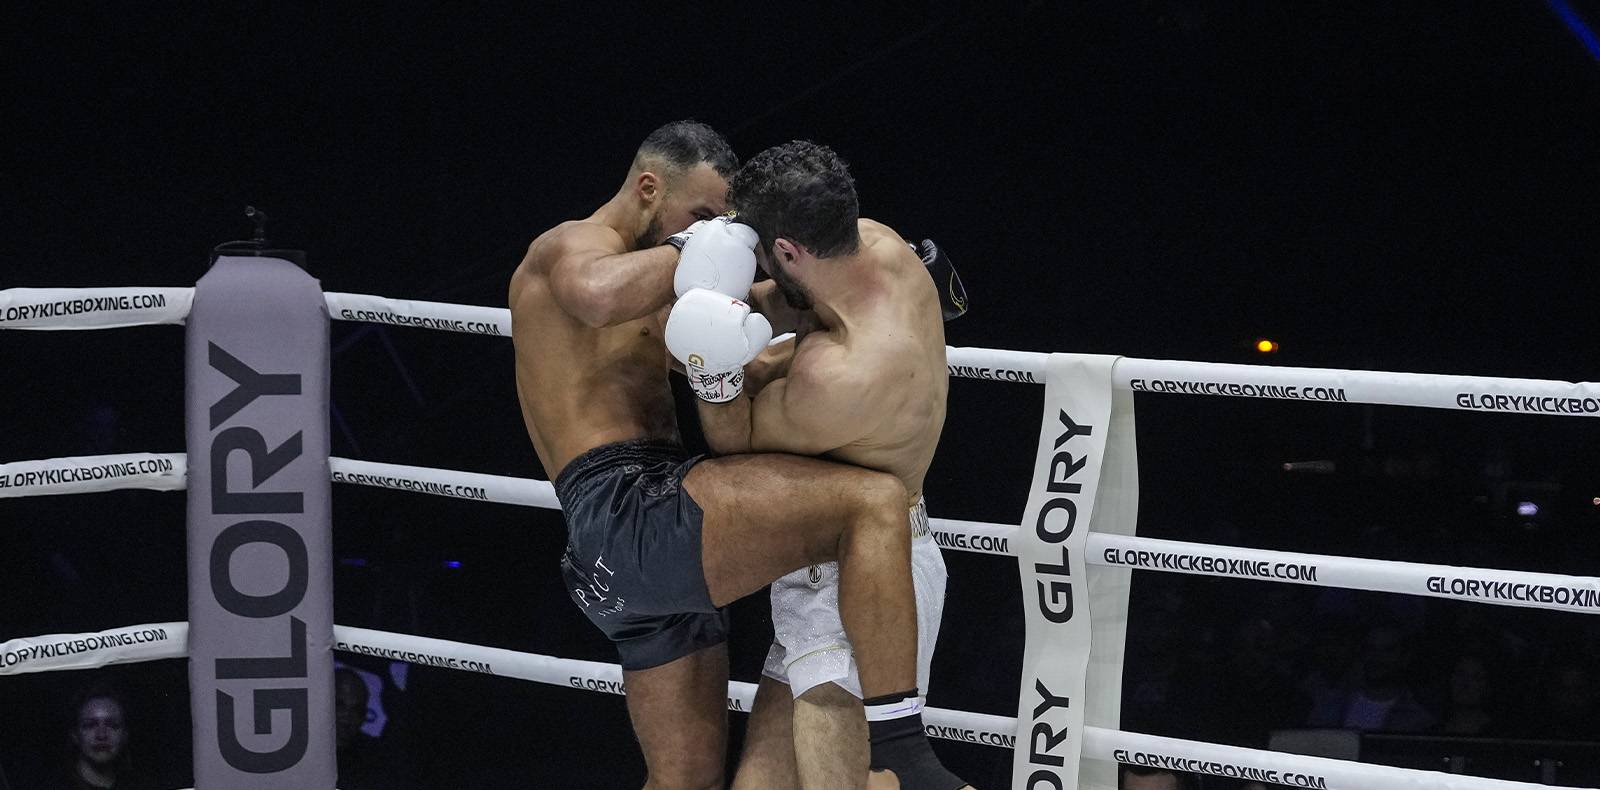 Glory, Kickboxing, Cyril Benzaquen, Youssef Boughanem